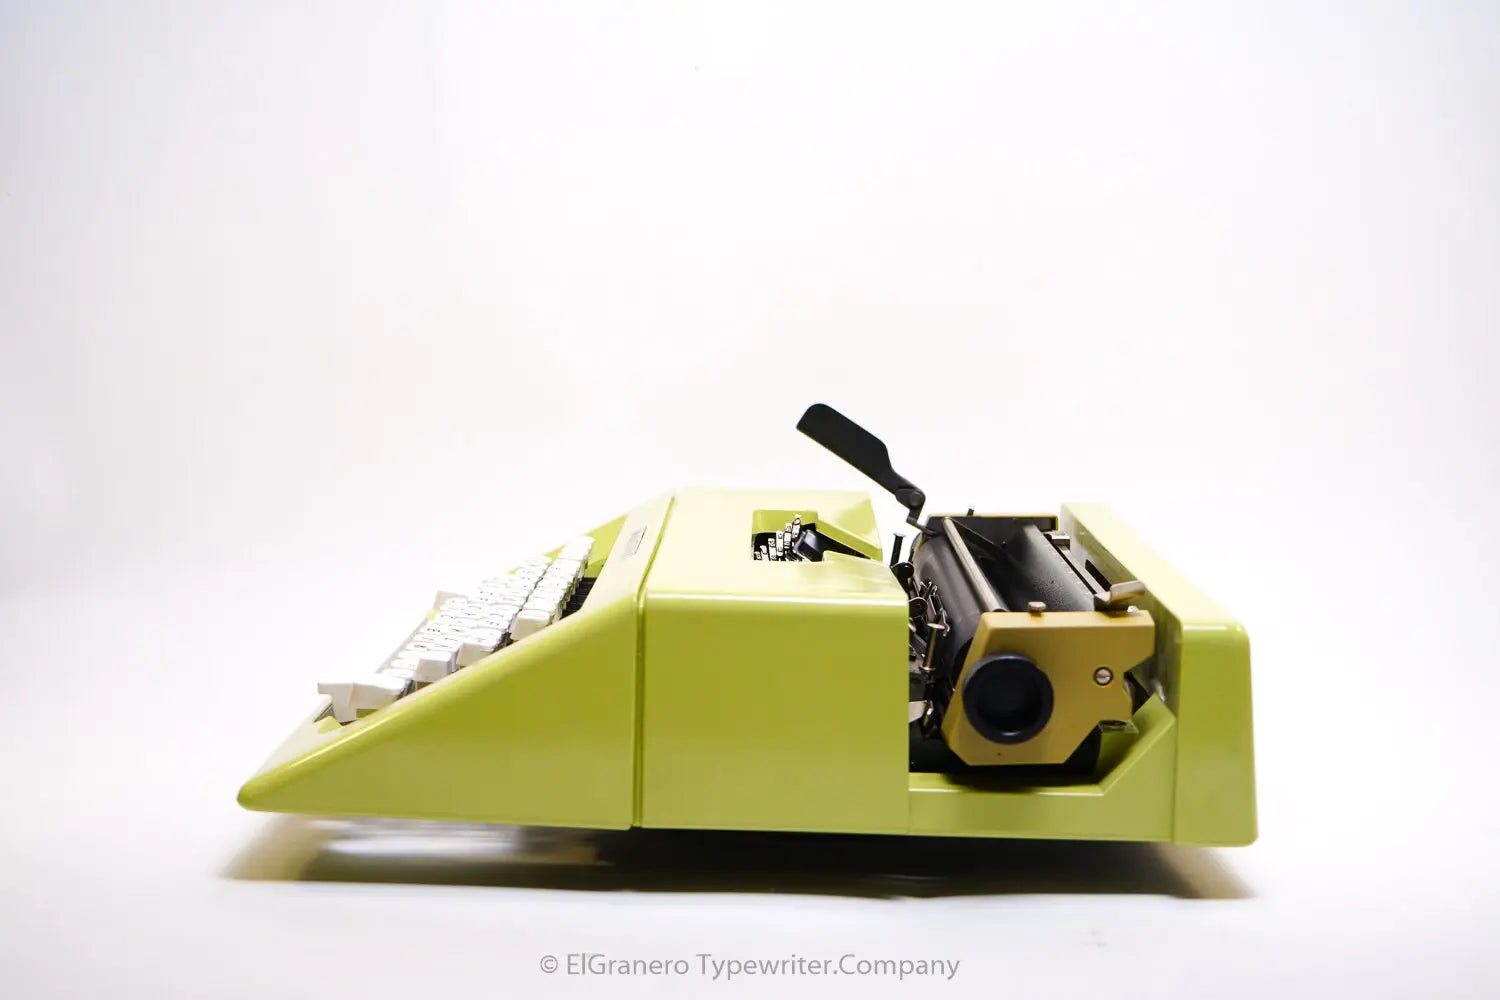 SALE! - Olivetti Lettera 25 Lime Yellow Typewriter, Vintage, Professionally Serviced - ElGranero Typewriter.Company